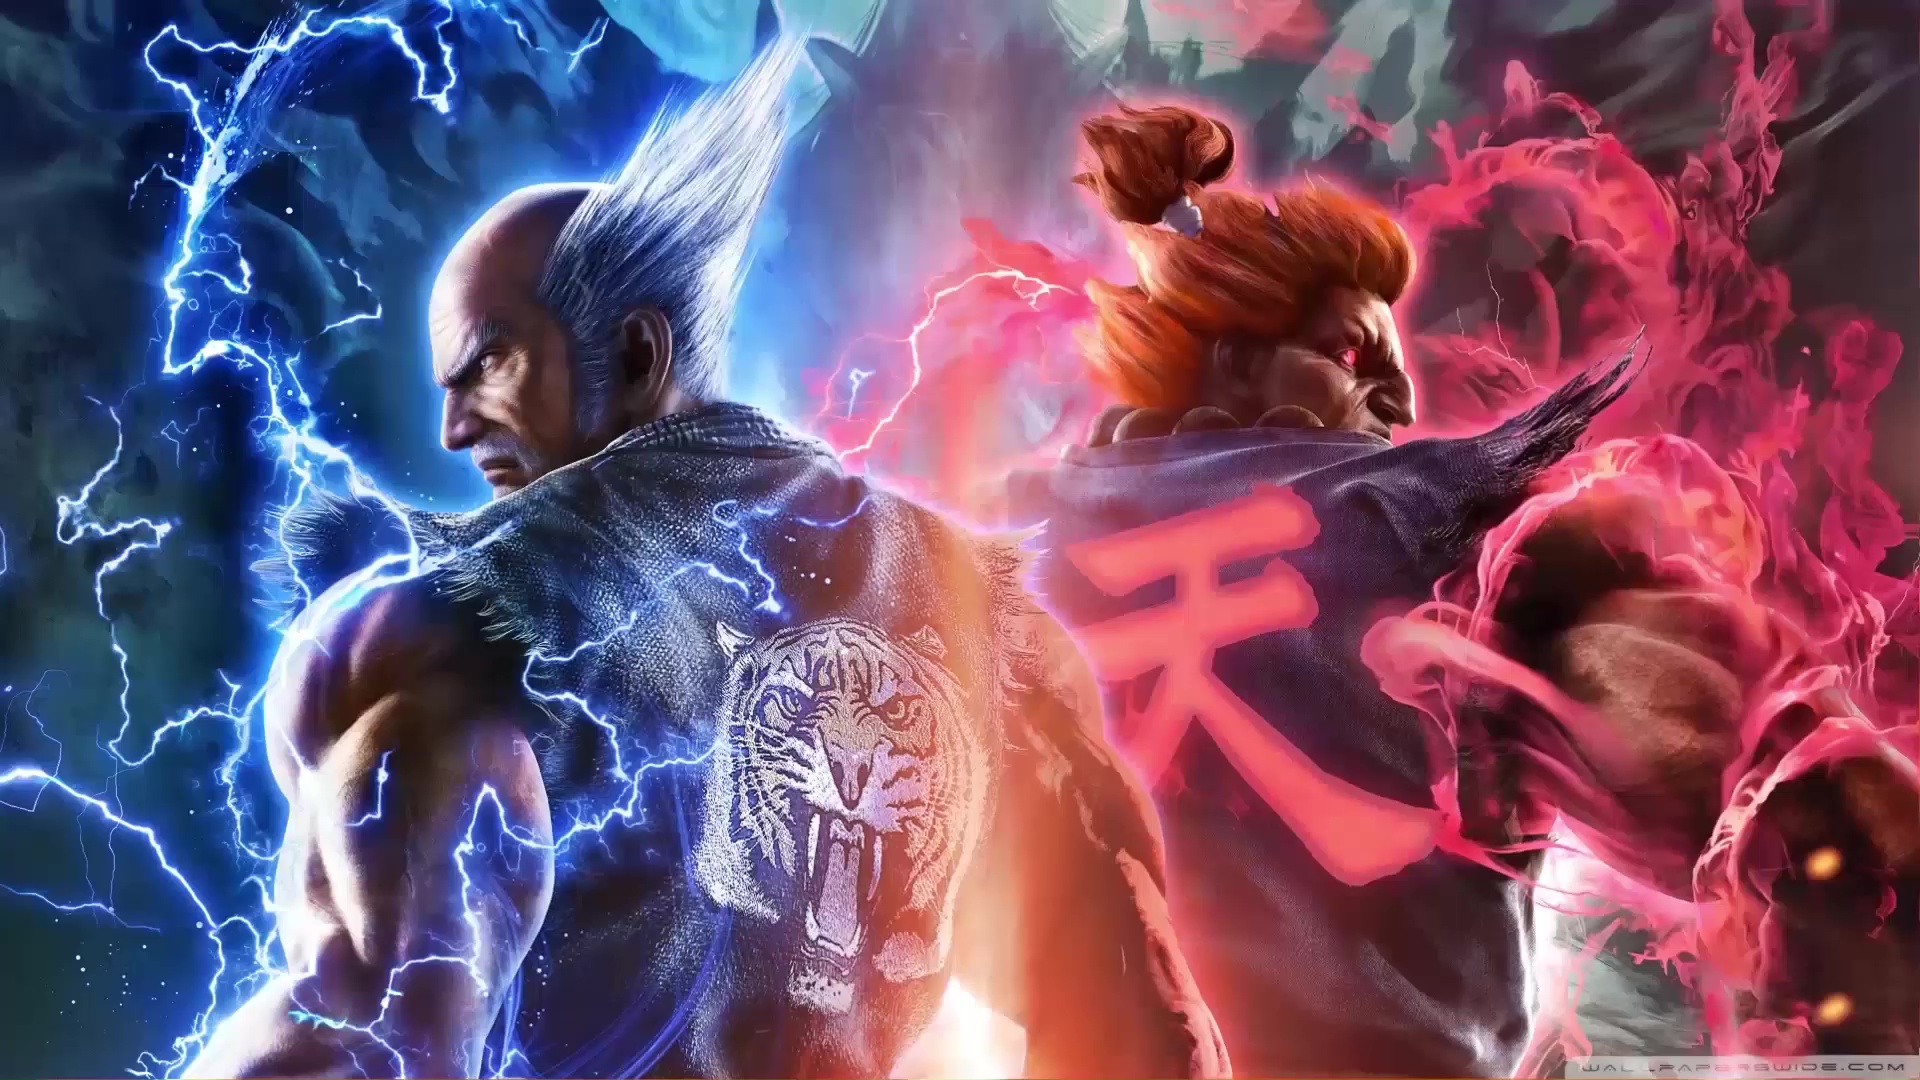 Kazuya Mishima - Tekken & Video Games Background Wallpapers on